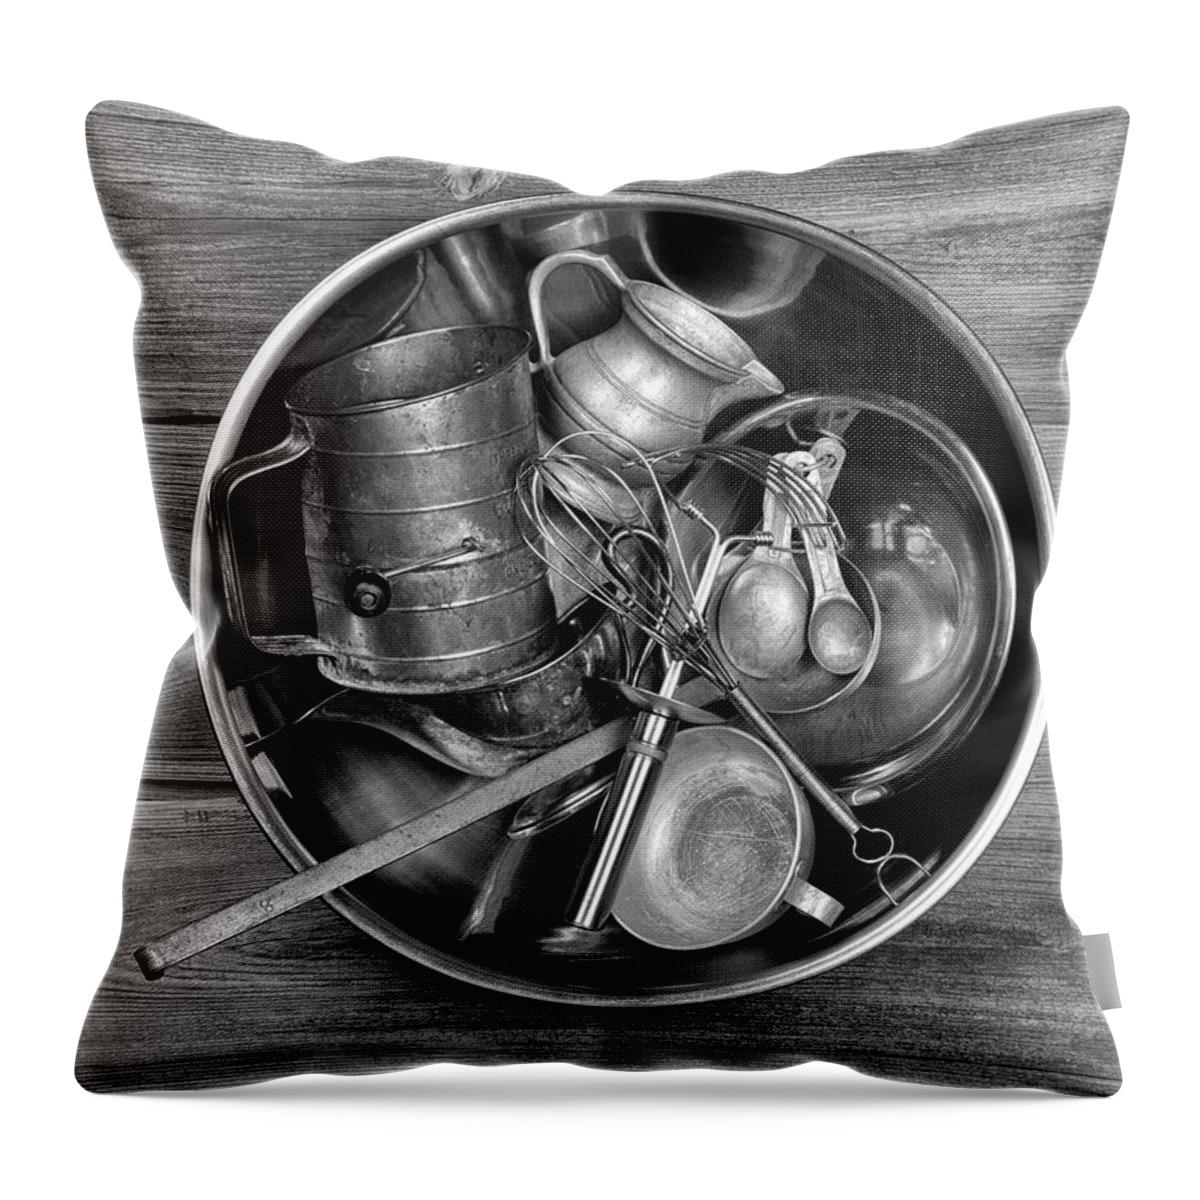 B&w Throw Pillow featuring the photograph Kitchen Utensils Still Life I by Tom Mc Nemar